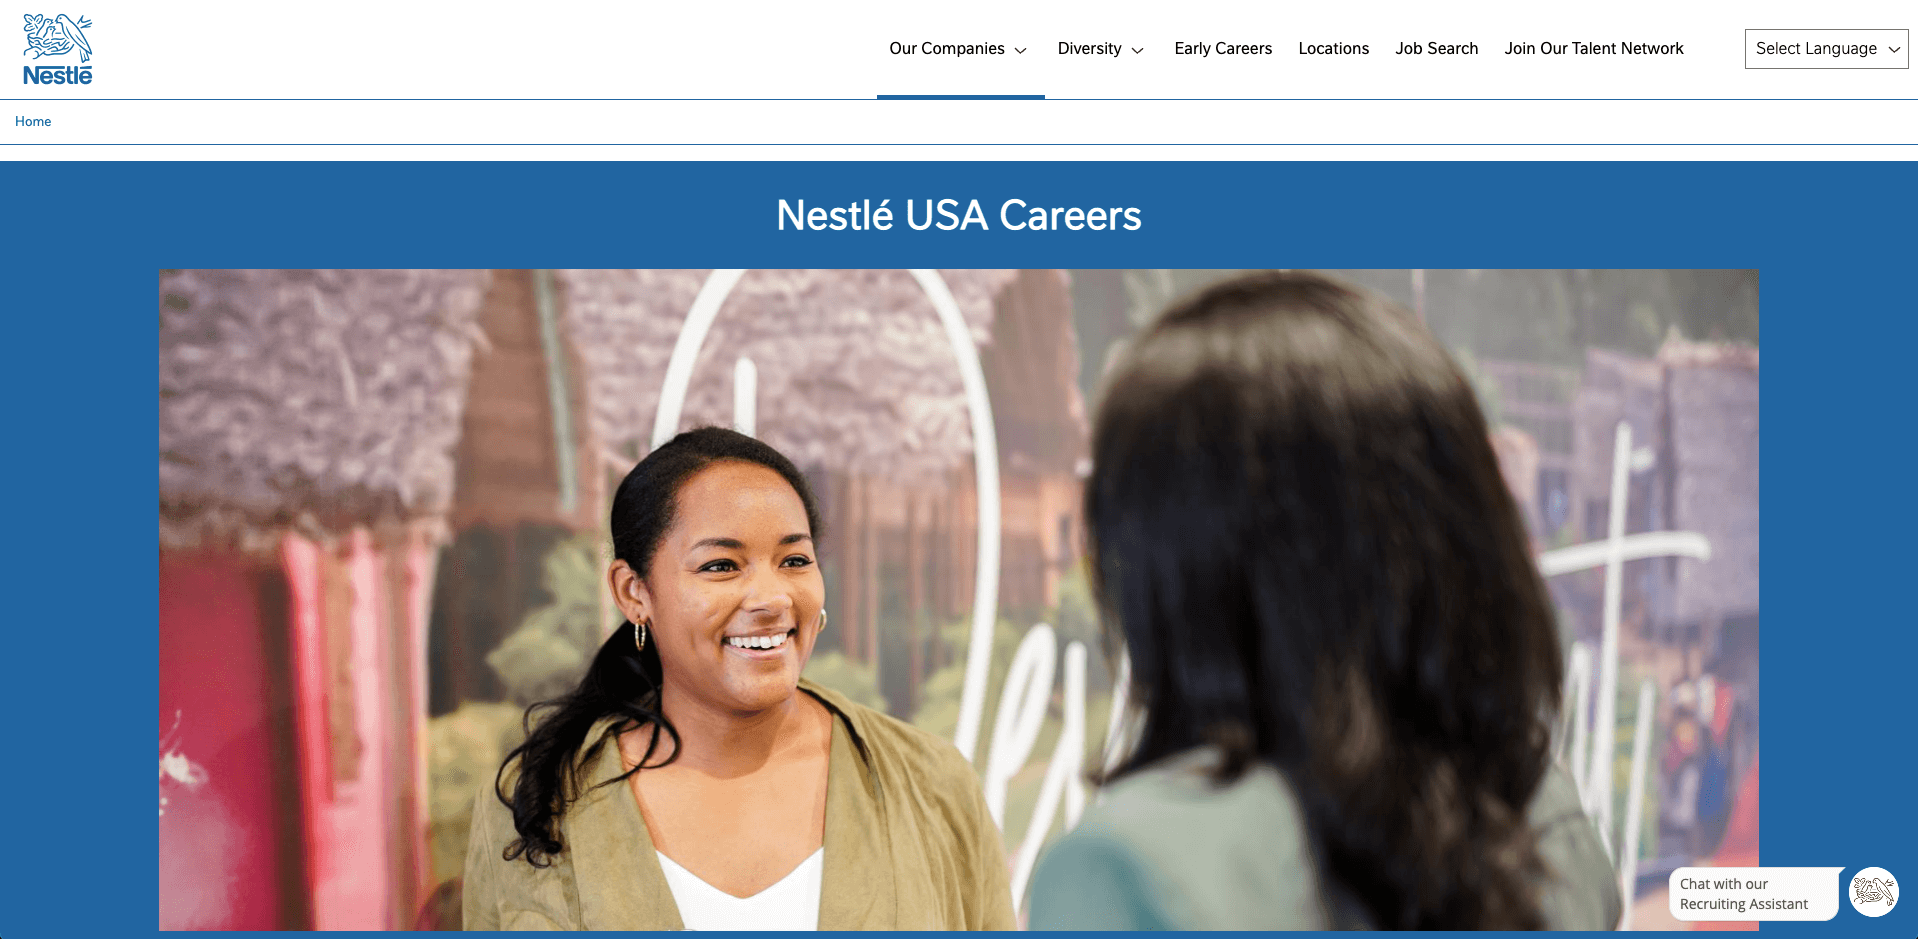 nestle-usa-careers-landing-page